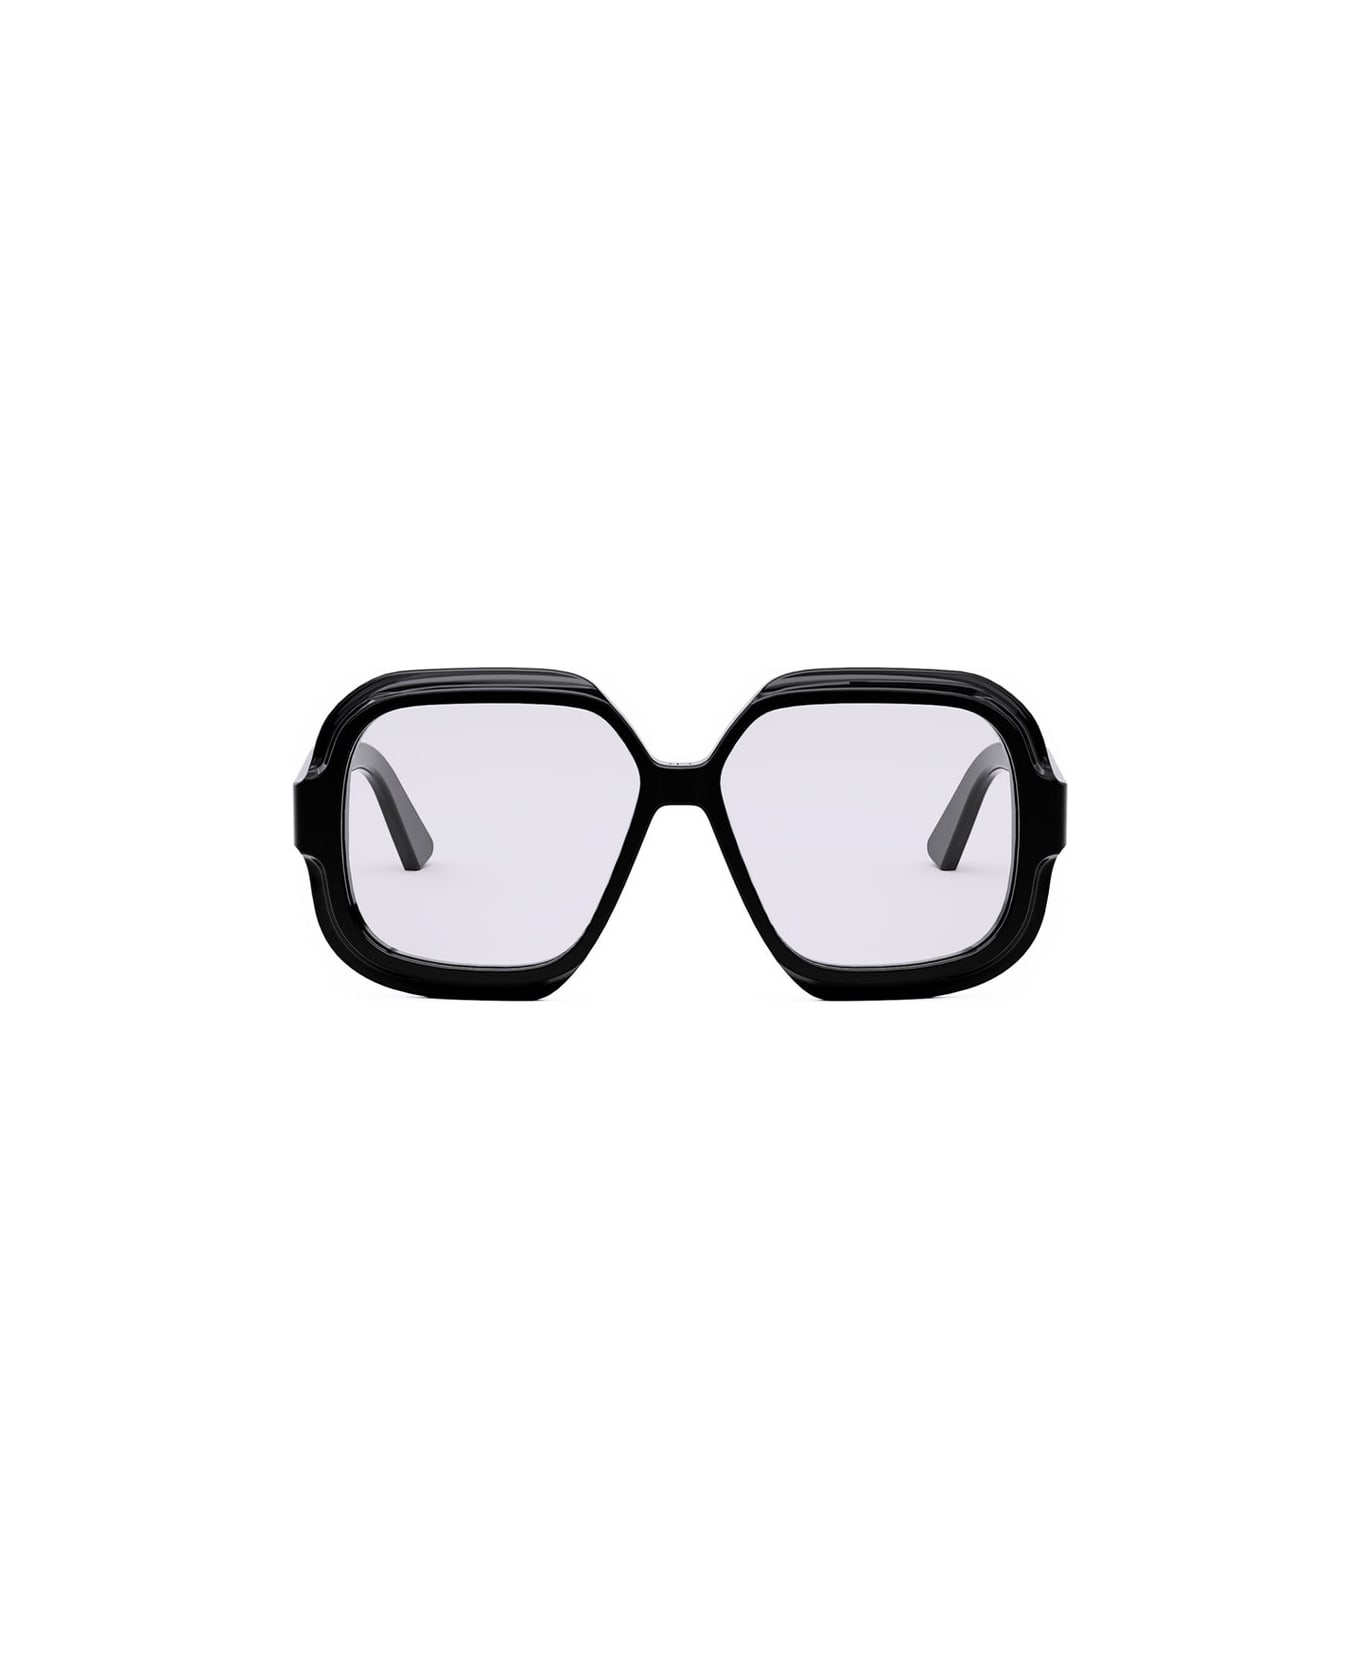 Dior Eyewear Glasses - Nero アイウェア